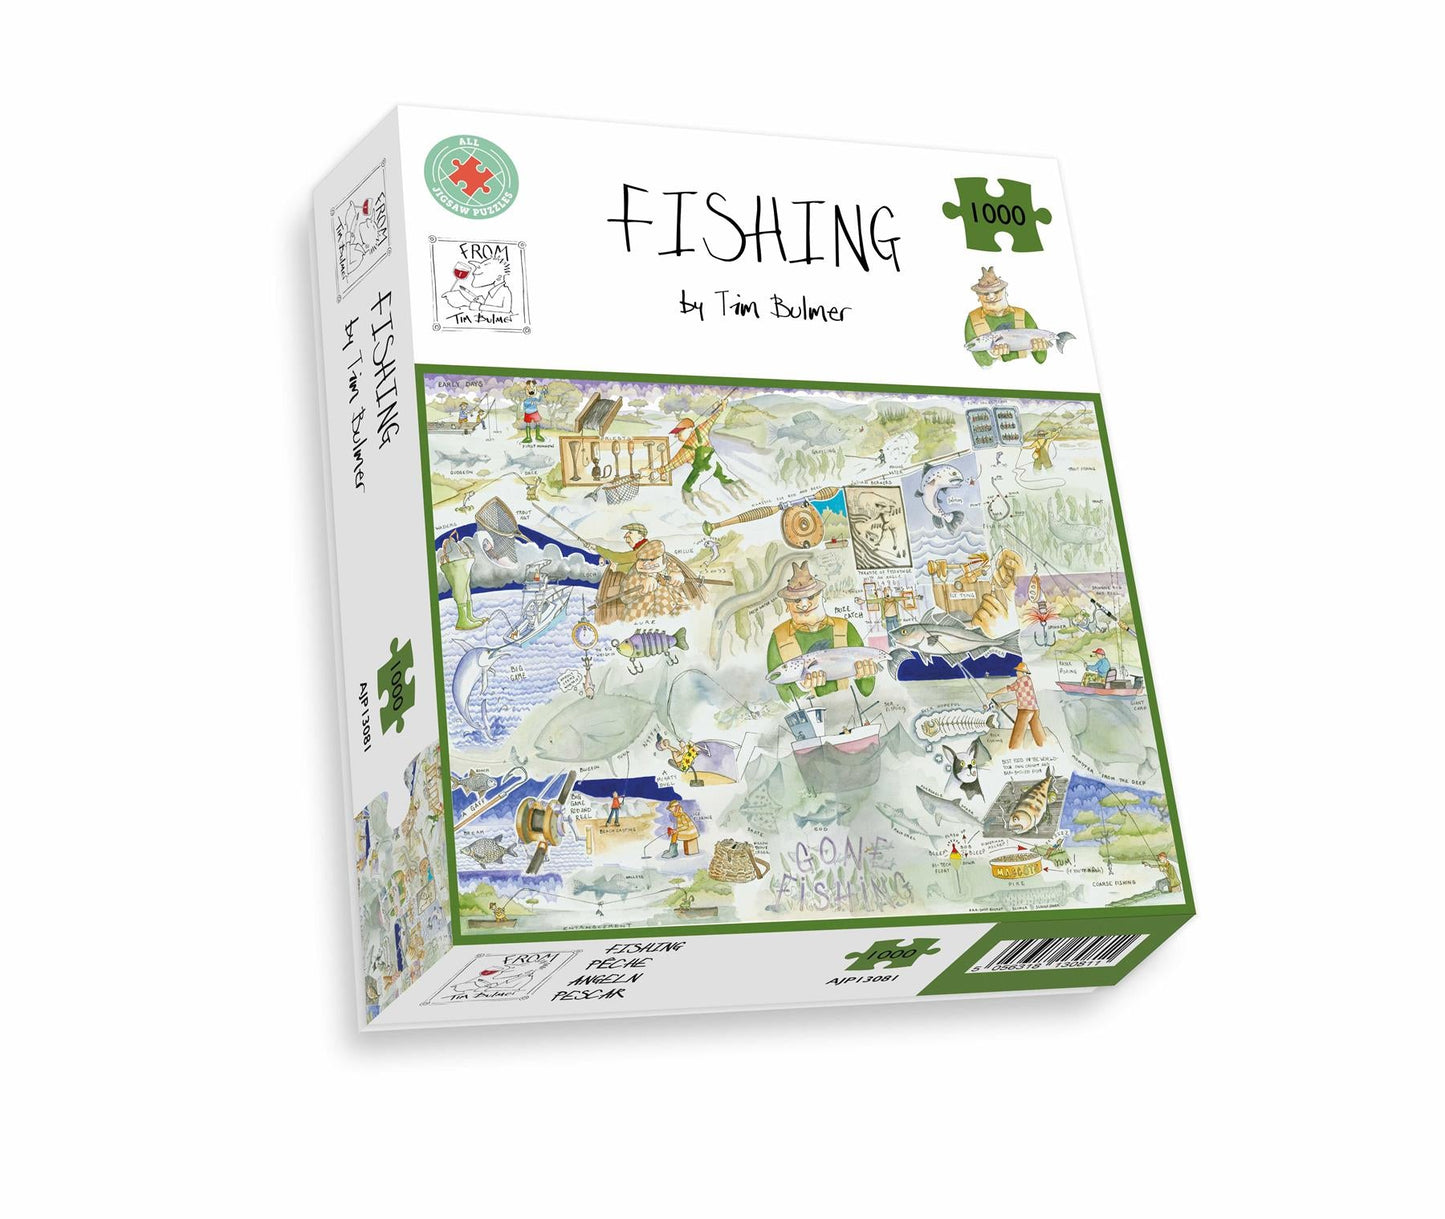 Fishing - Tim Bulmer 1000 Piece Jigsaw Puzzle box